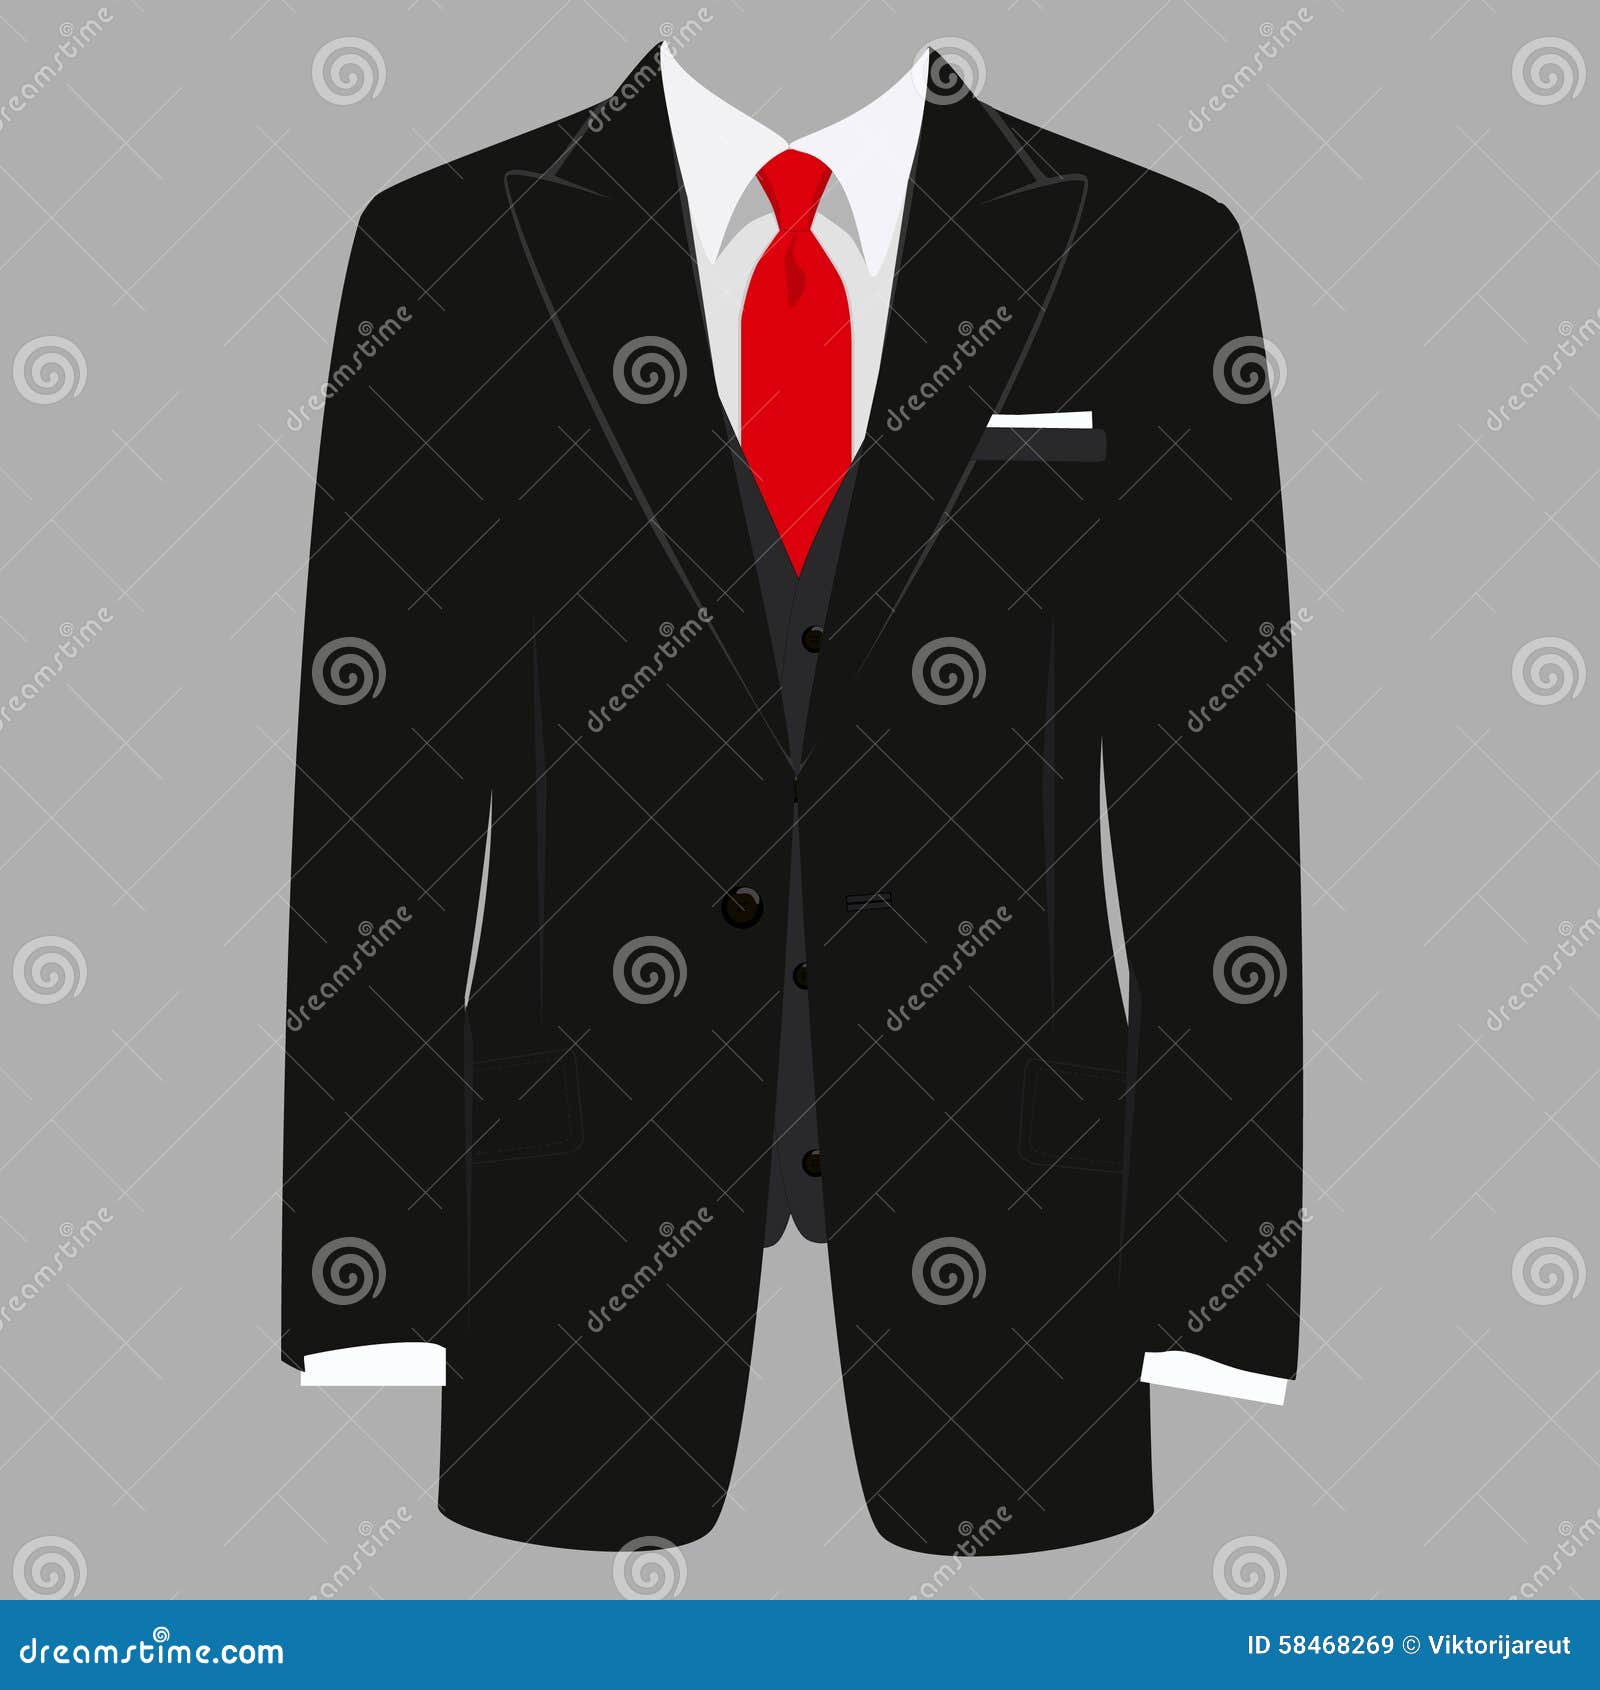 Man suit stock illustration. Illustration of shirt, male - 58468269